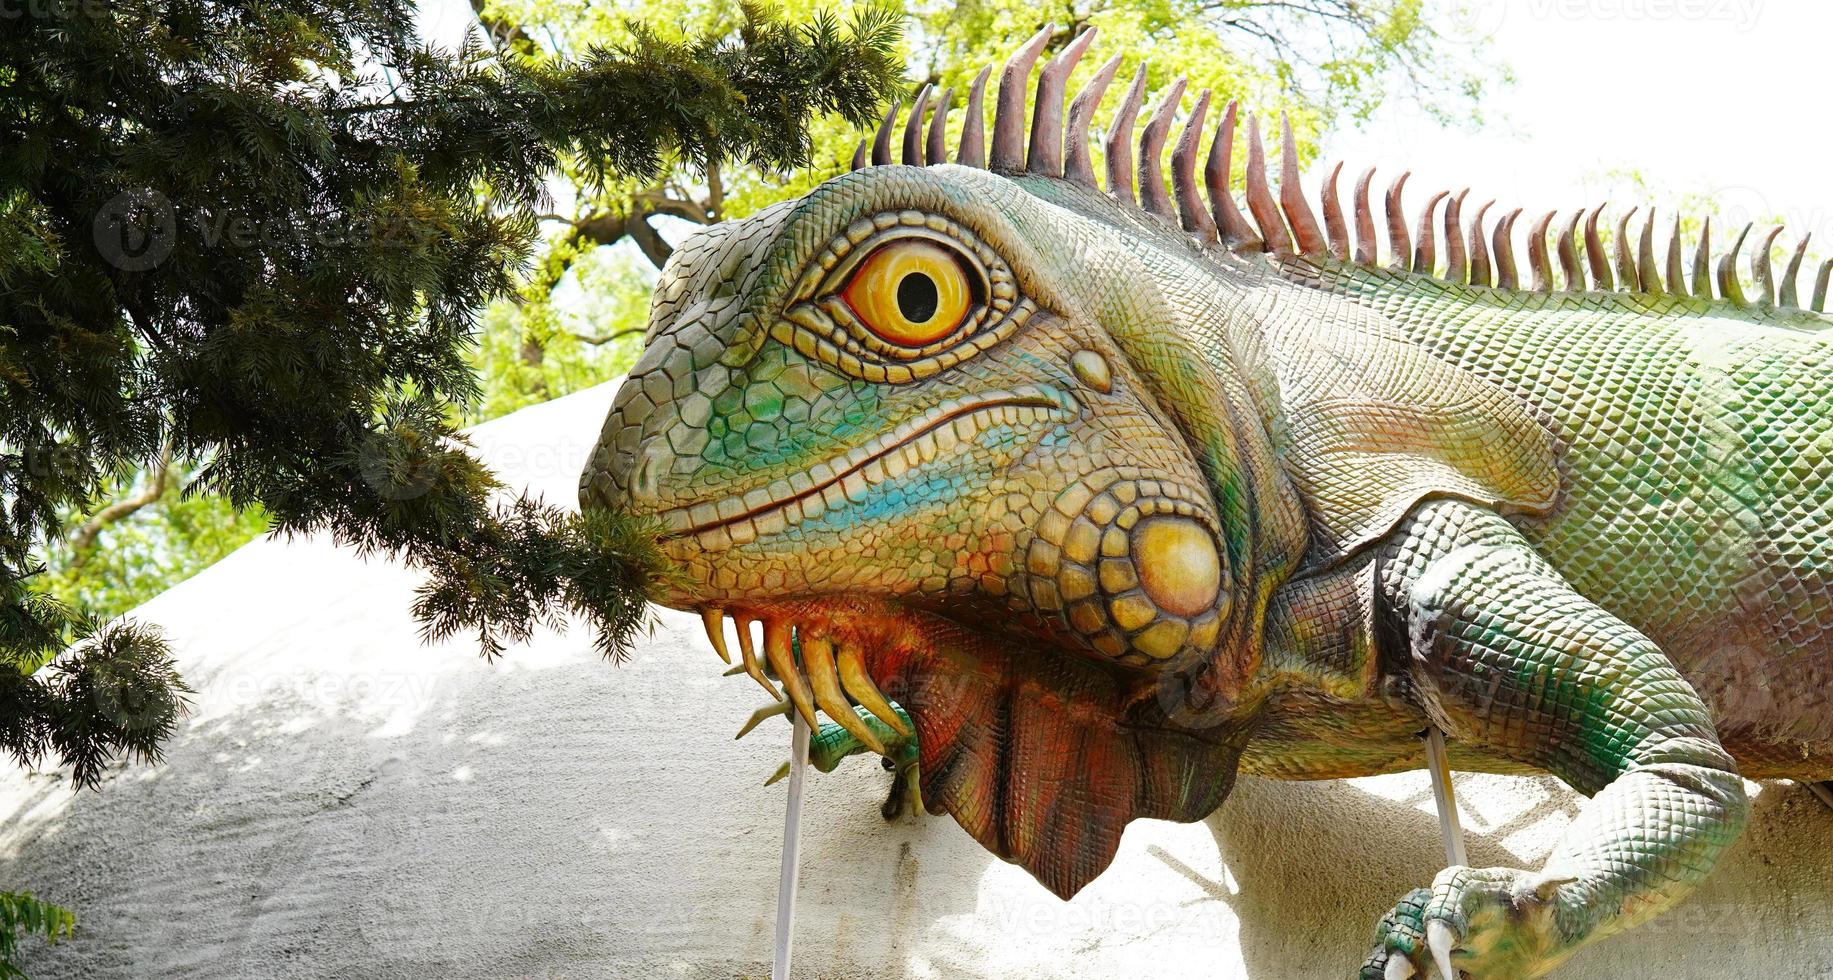 Chameleon statue image HD wallpaper photo